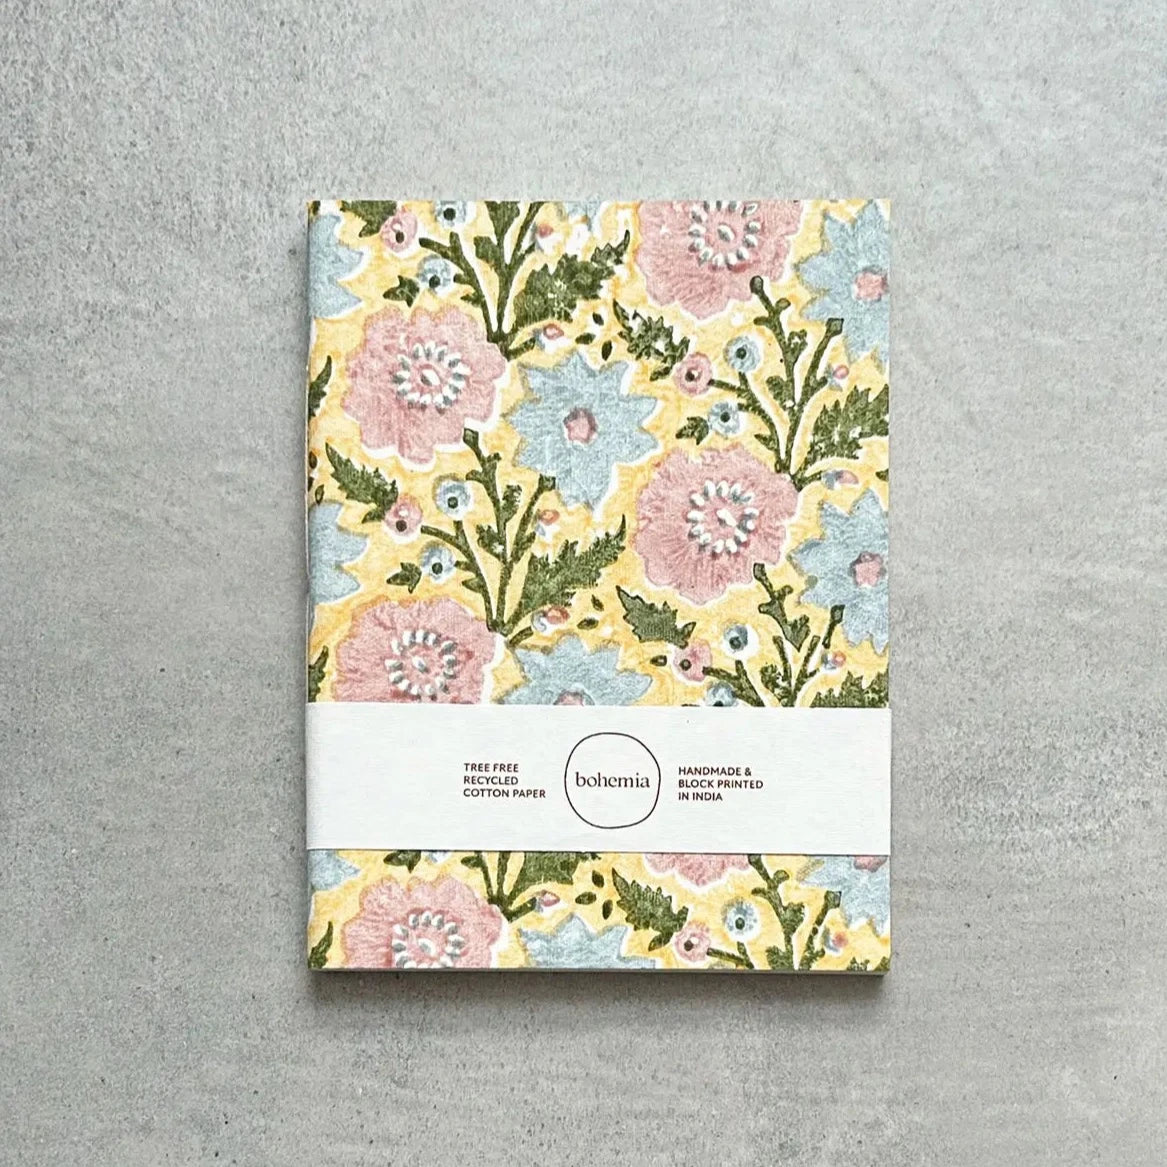 Floribunda Notebook